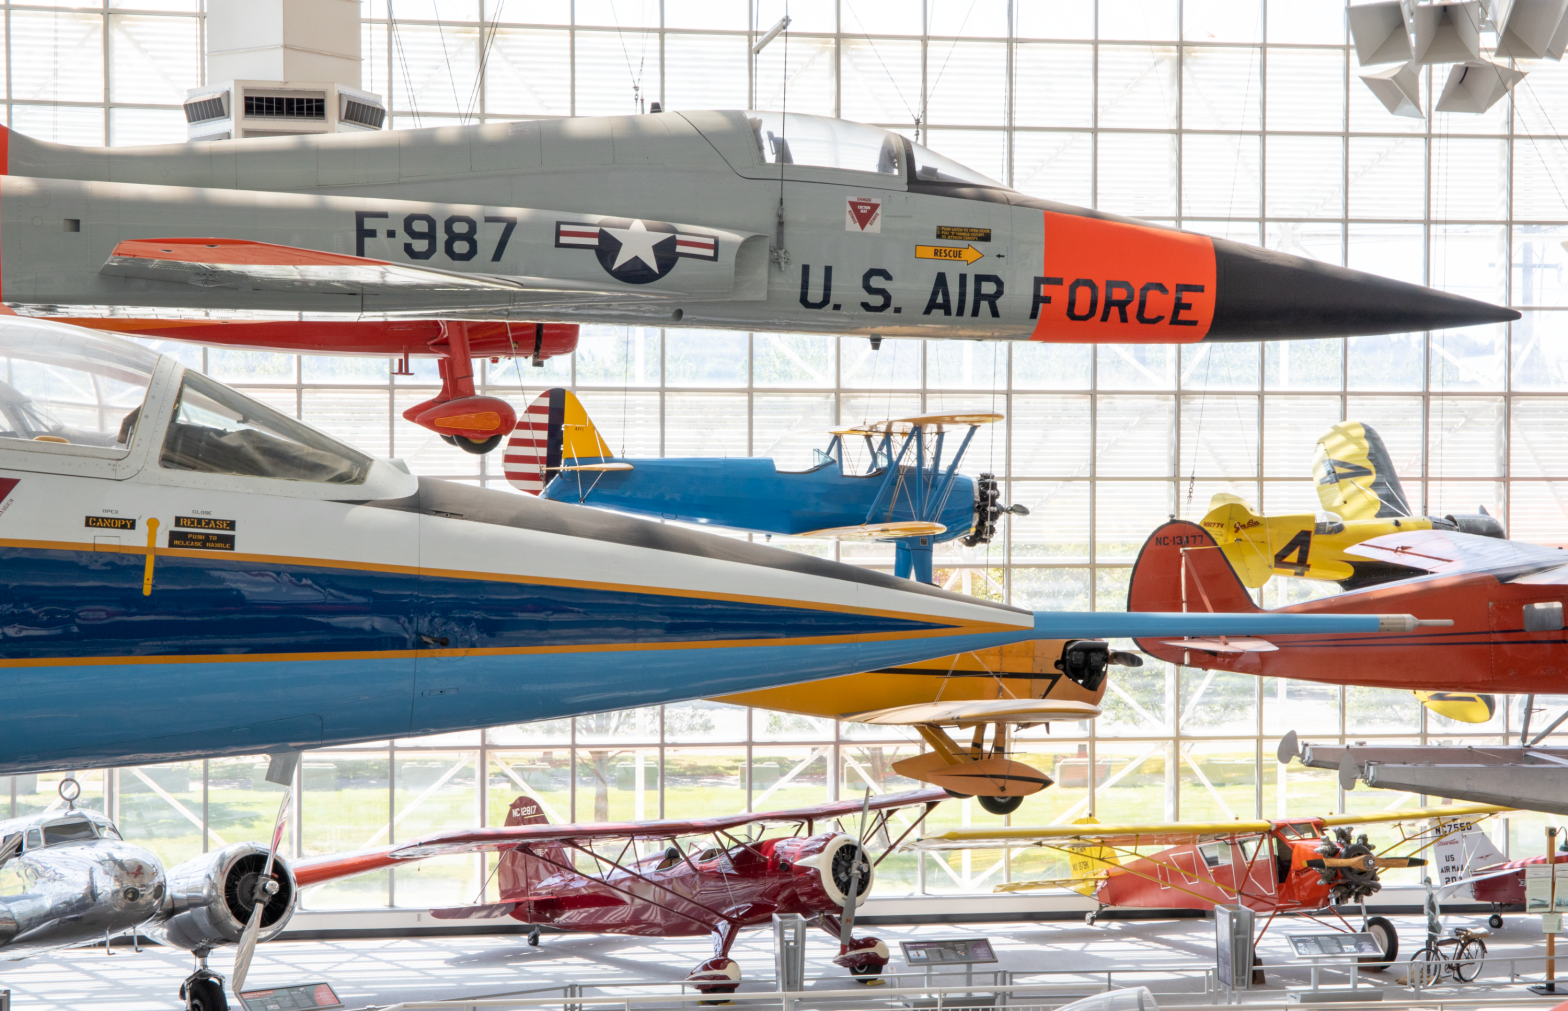 Airplanes displayed in a hangar